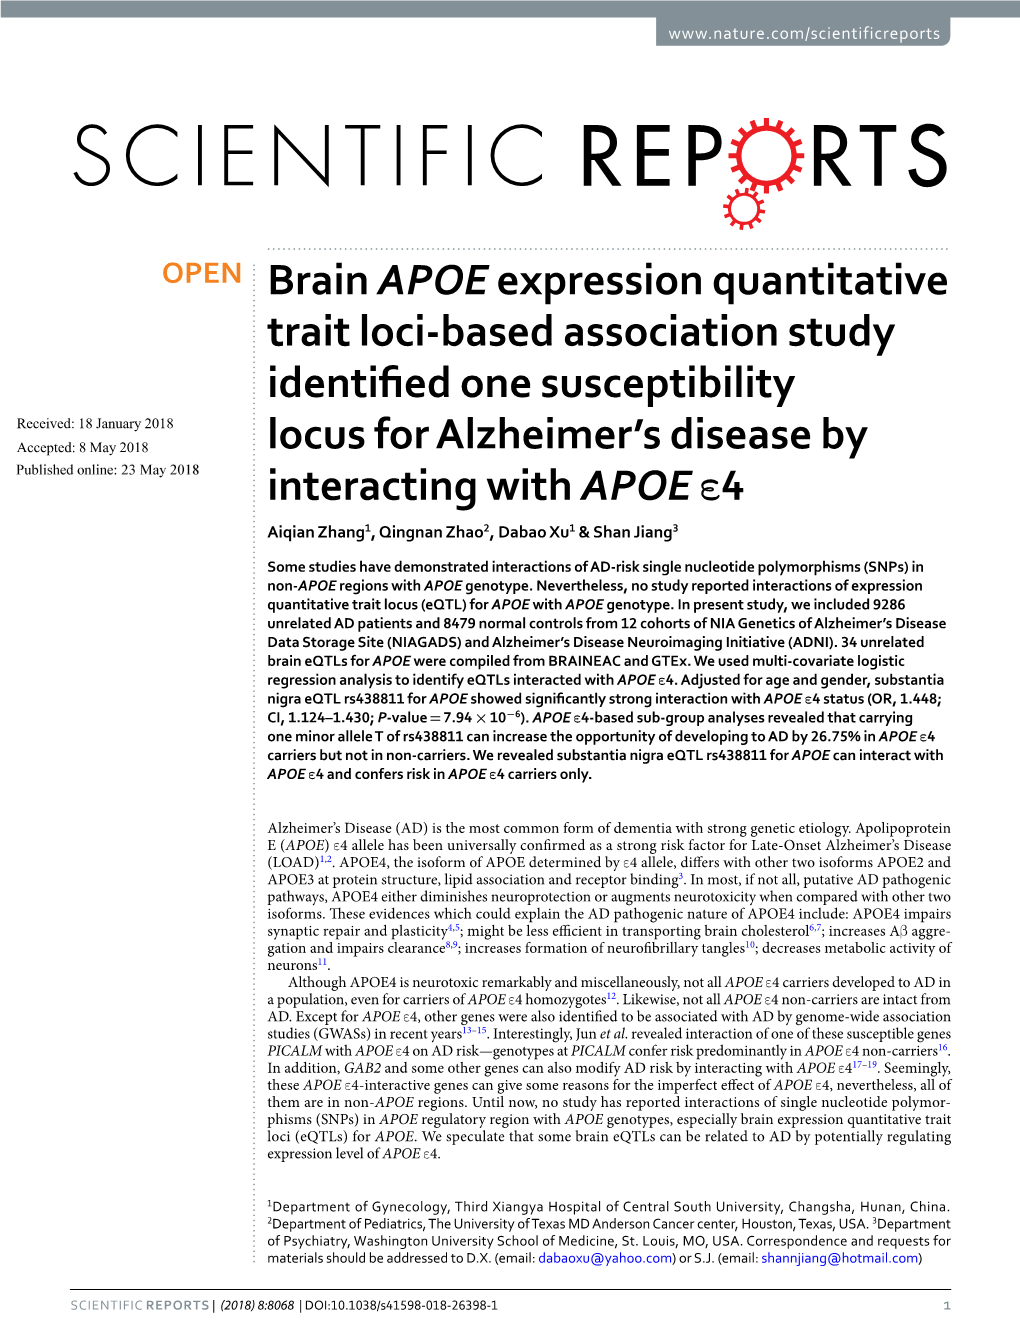 Brain APOE Expression Quantitative Trait Loci-Based Association Study